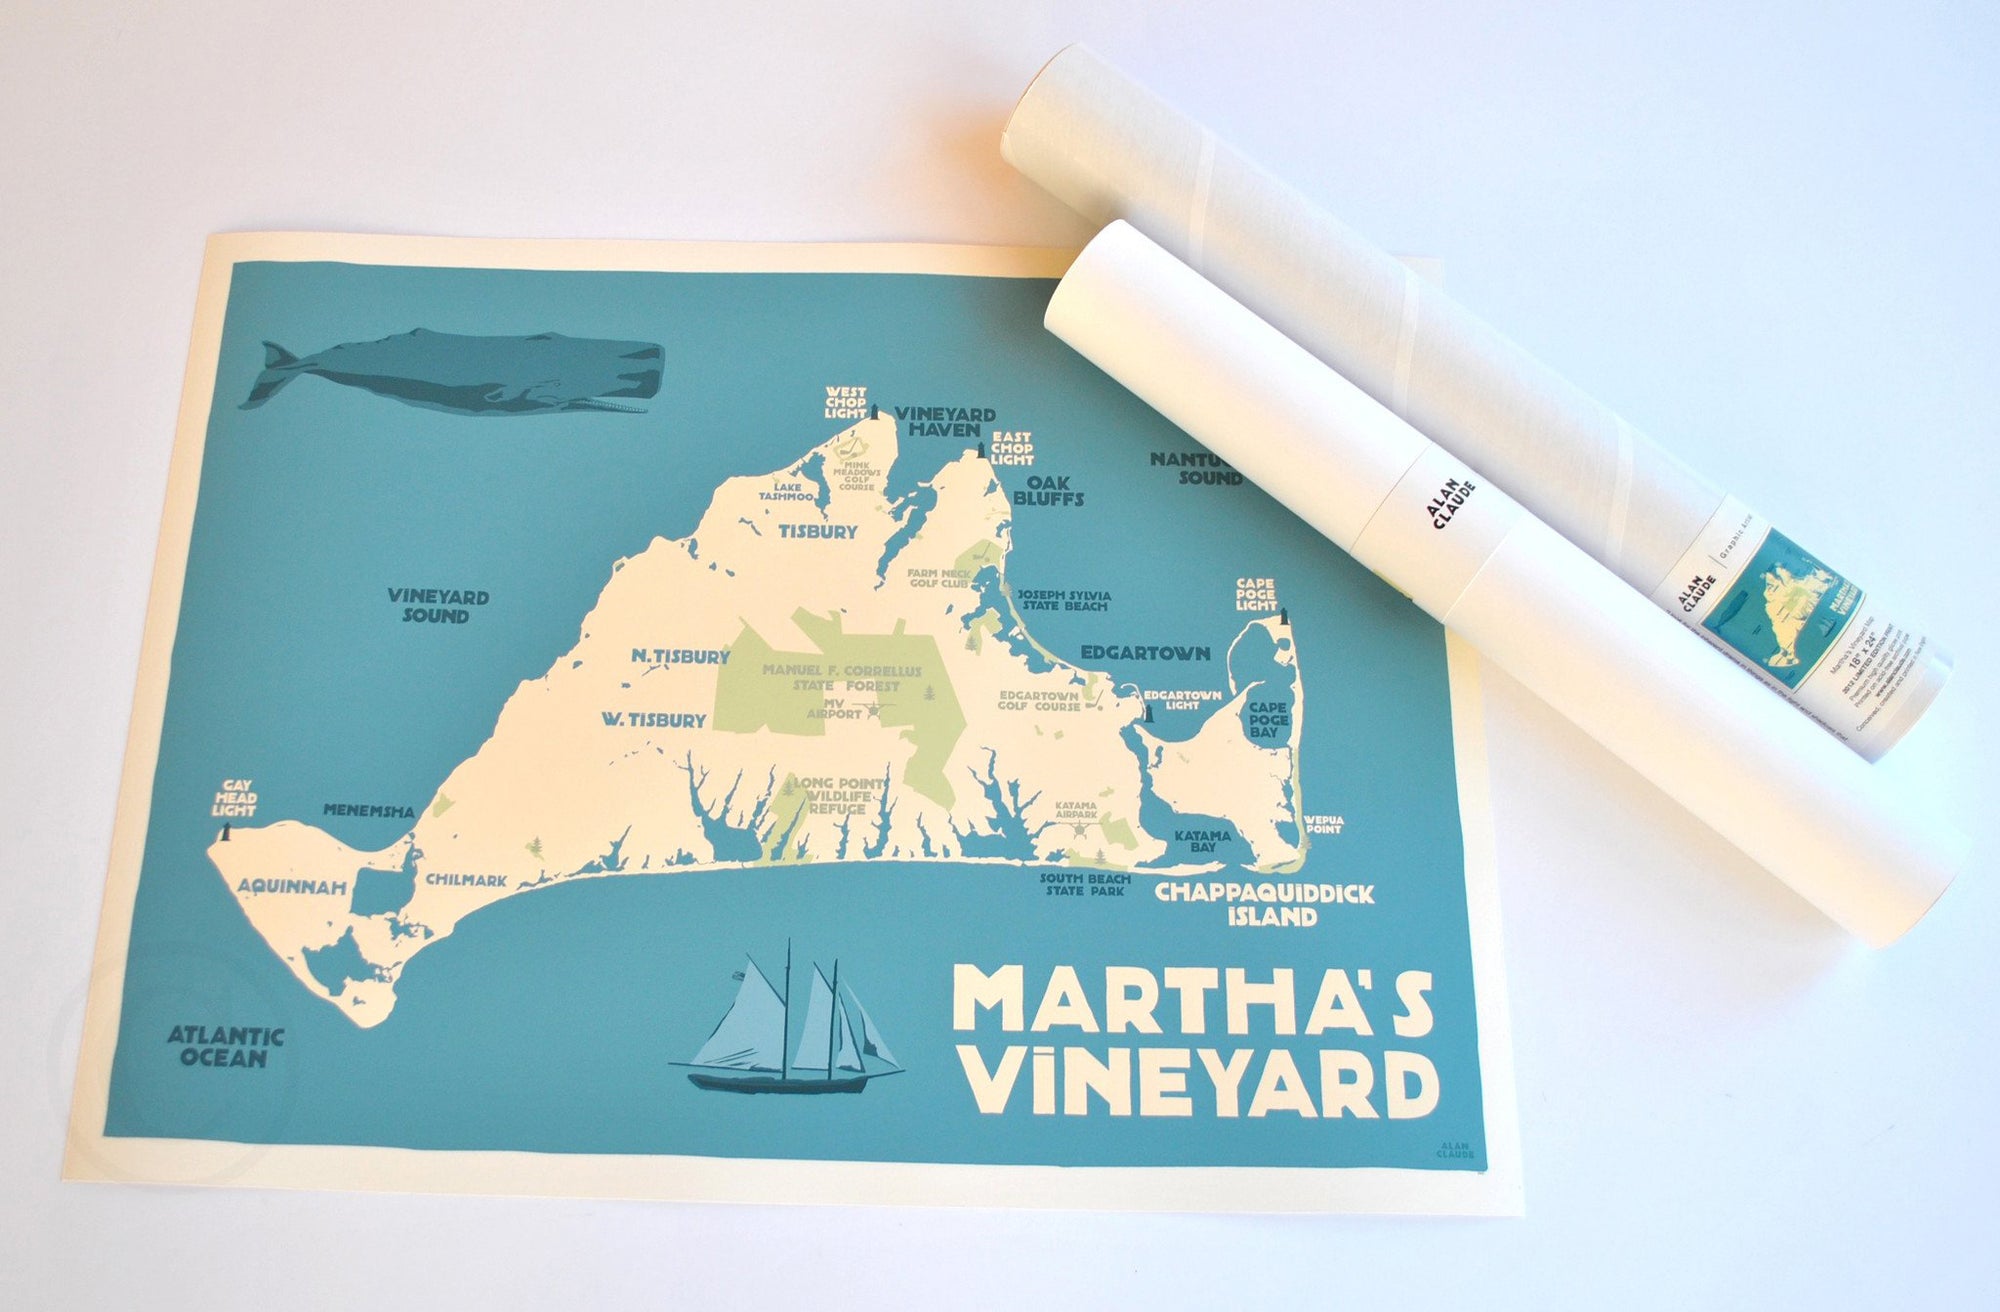 Martha's Vineyard Map Art Print 18" x 24" Travel Poster By Alan Claude - Massachusetts